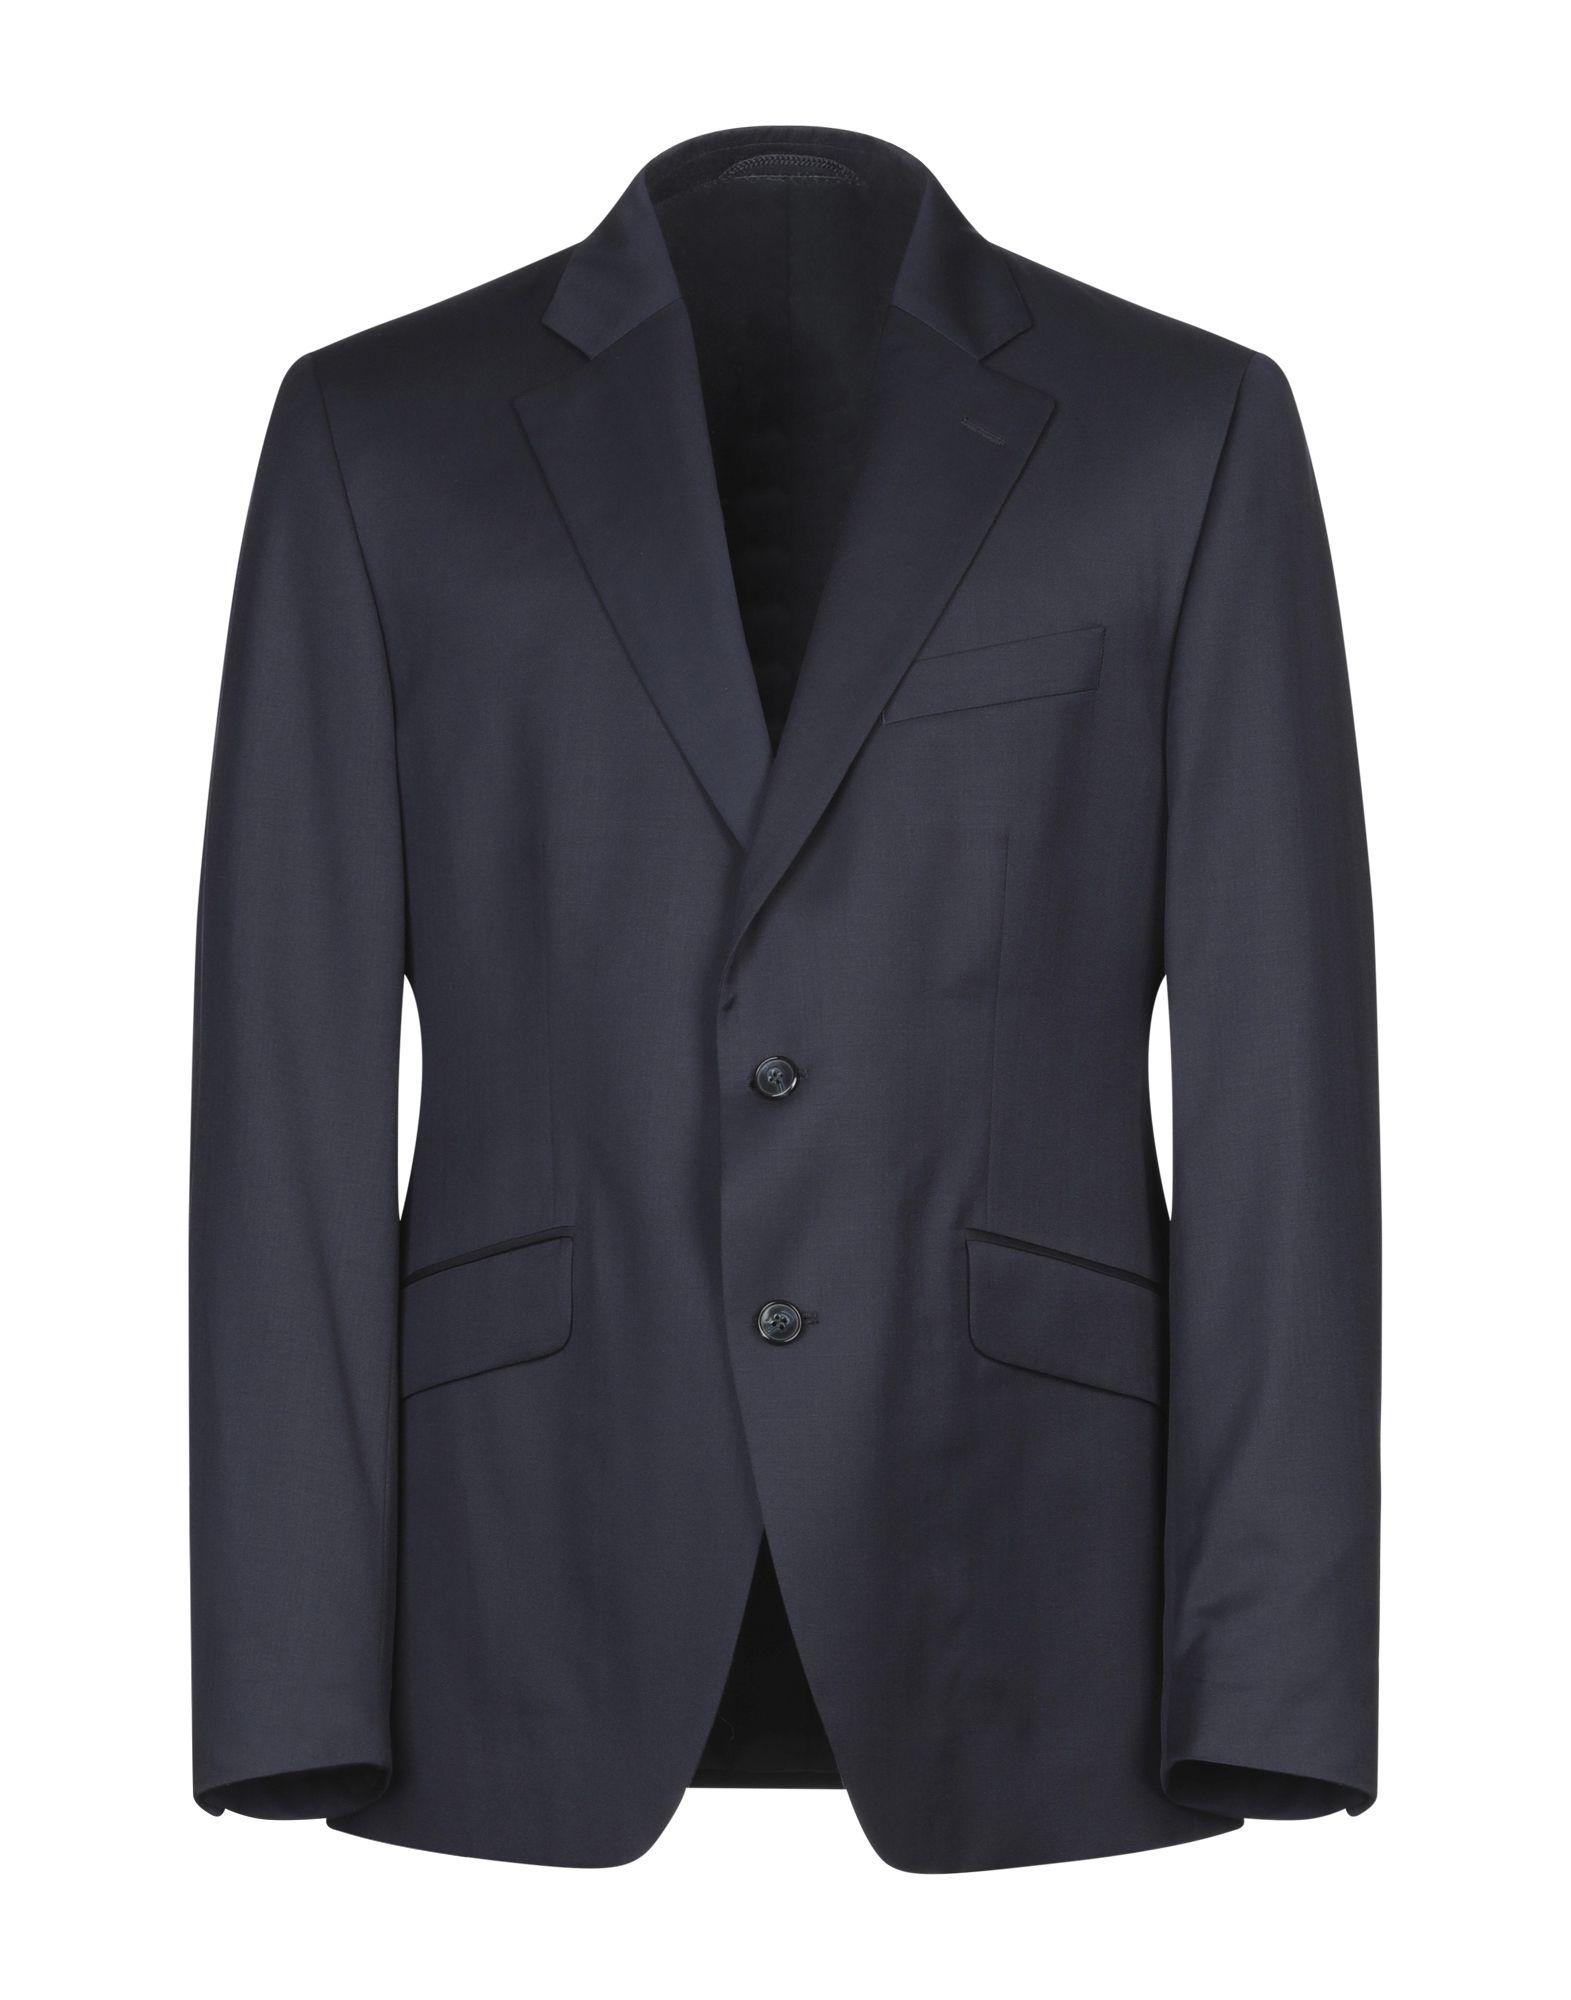 SCABAL® Wool Blazer in Dark Blue (Blue) for Men - Lyst